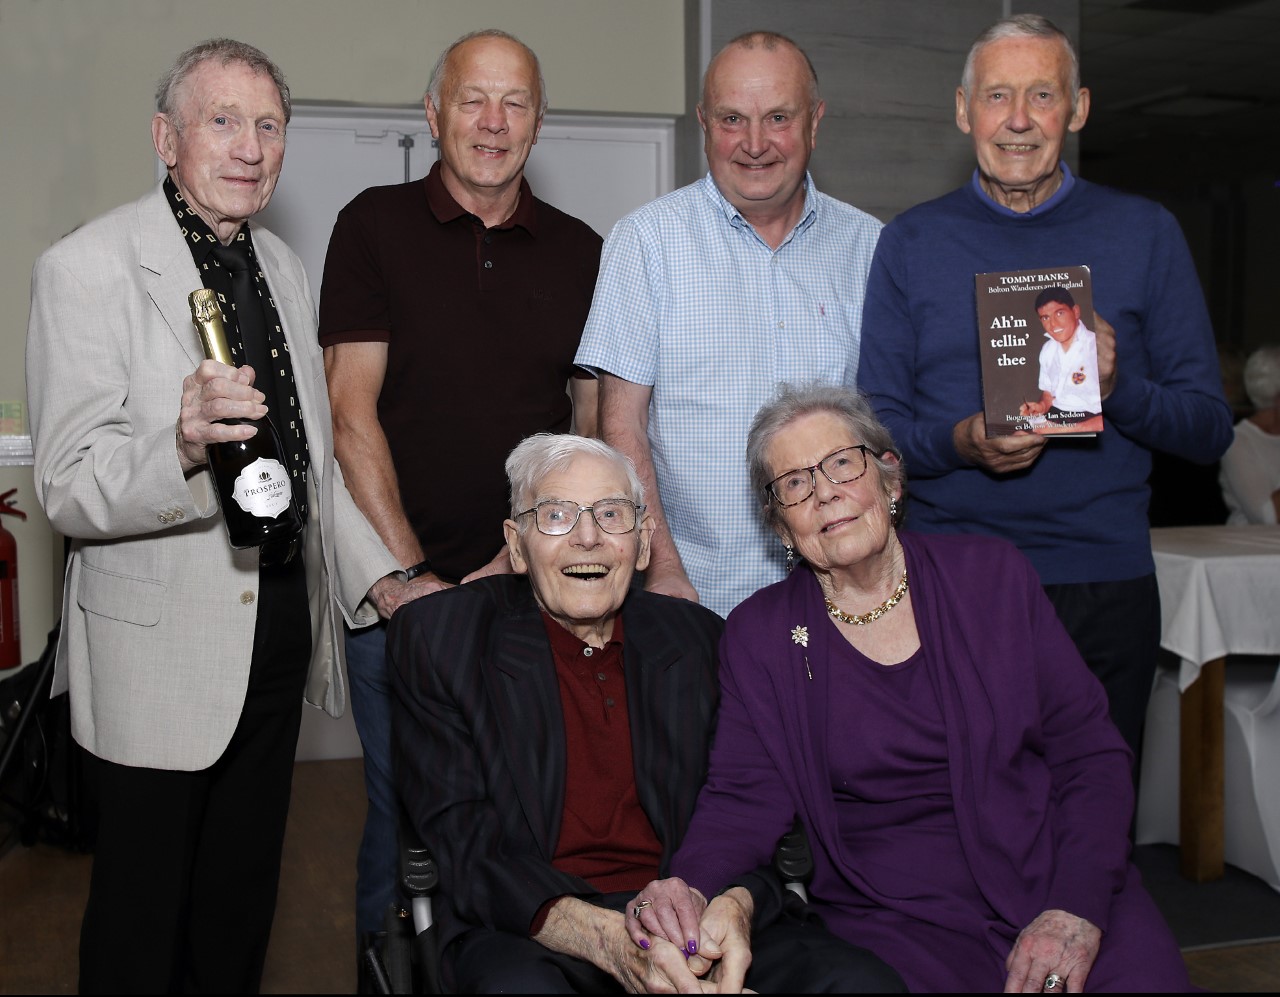 Bolton Wanderers legend Tommy Banks raises £6,000 for Alzheimer’s Society